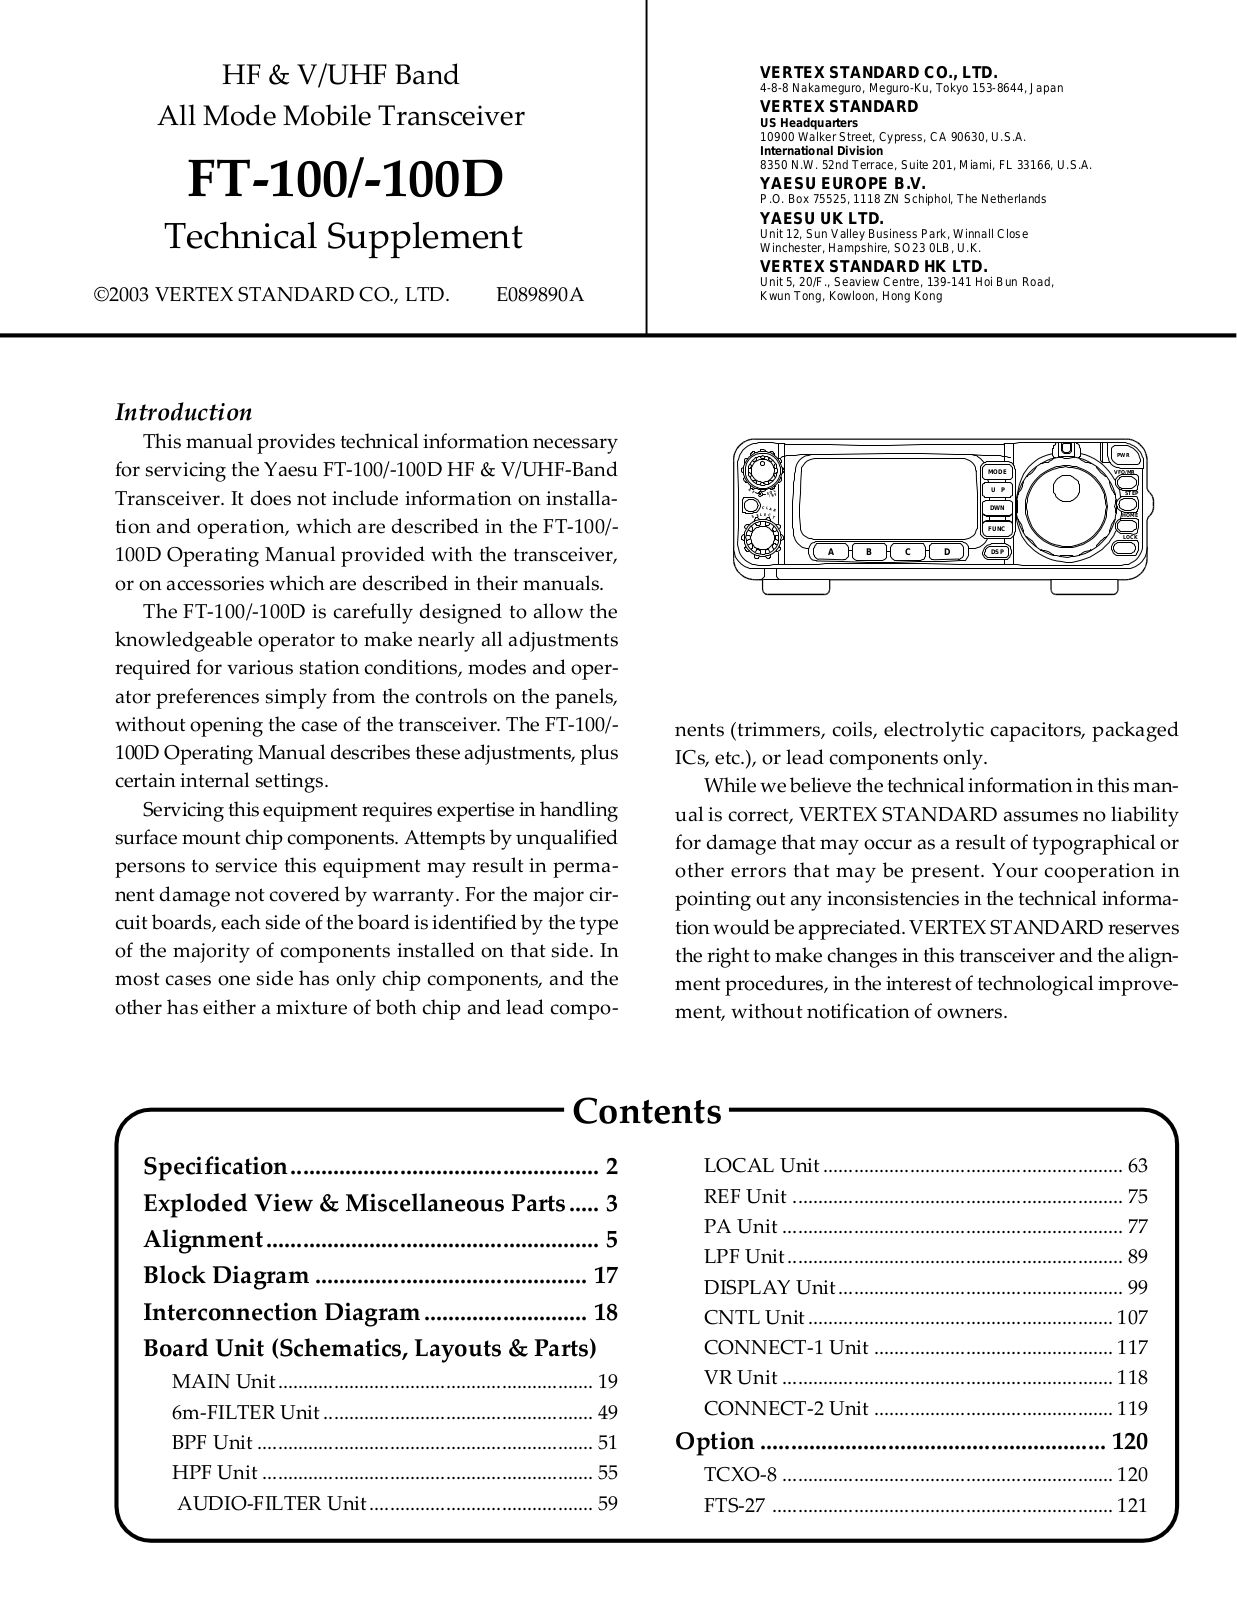 Yaesu FT-100D, FT-100 Service Manual